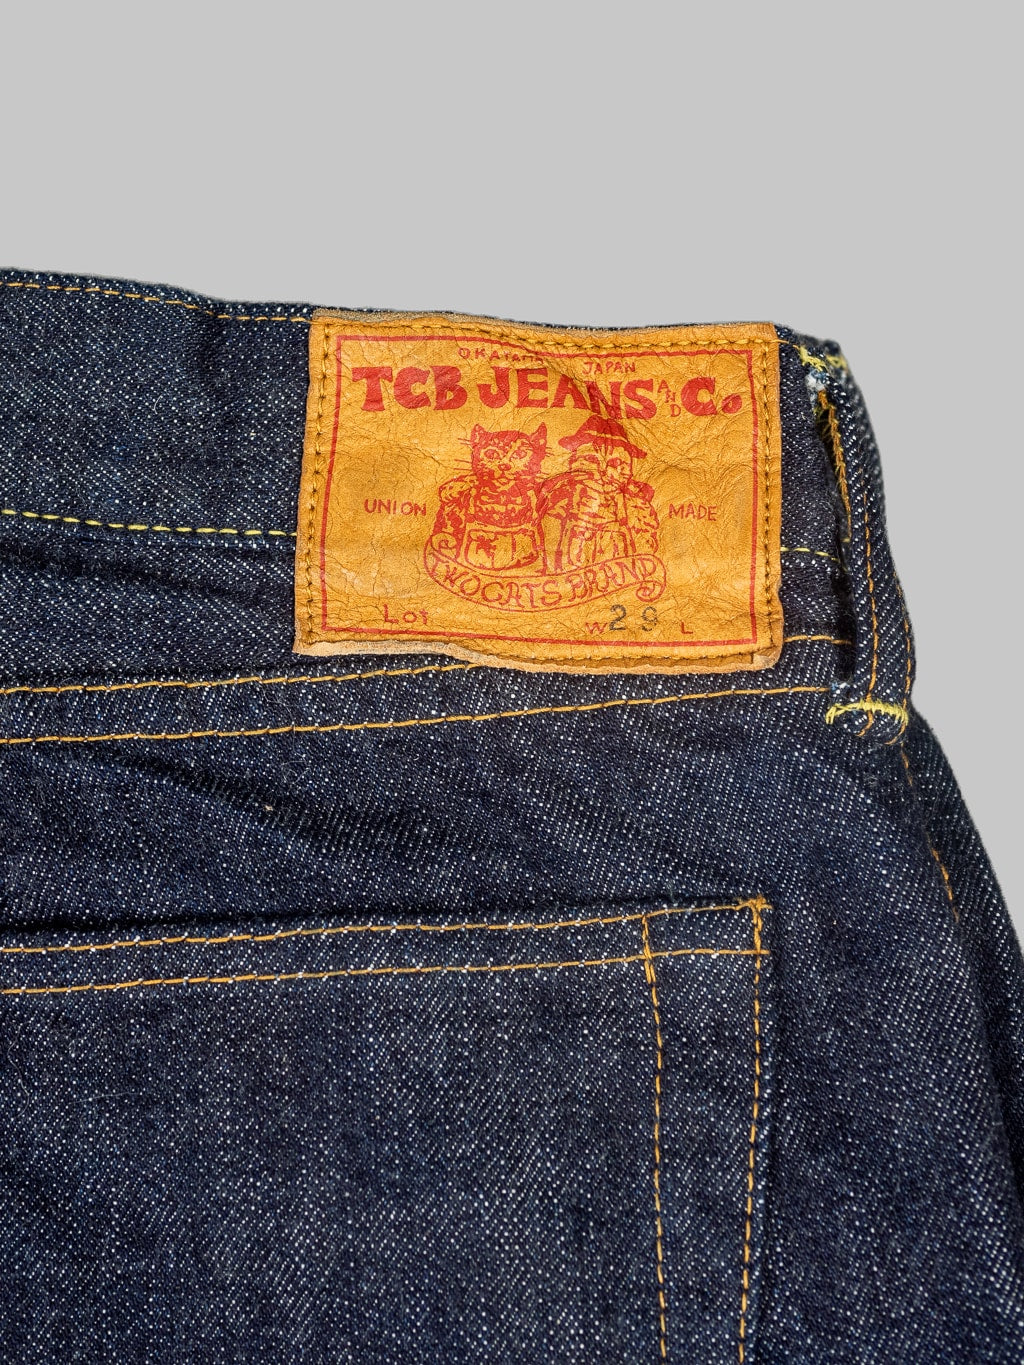 tcb jeans slim 50s selvedge japanese denim leather patch